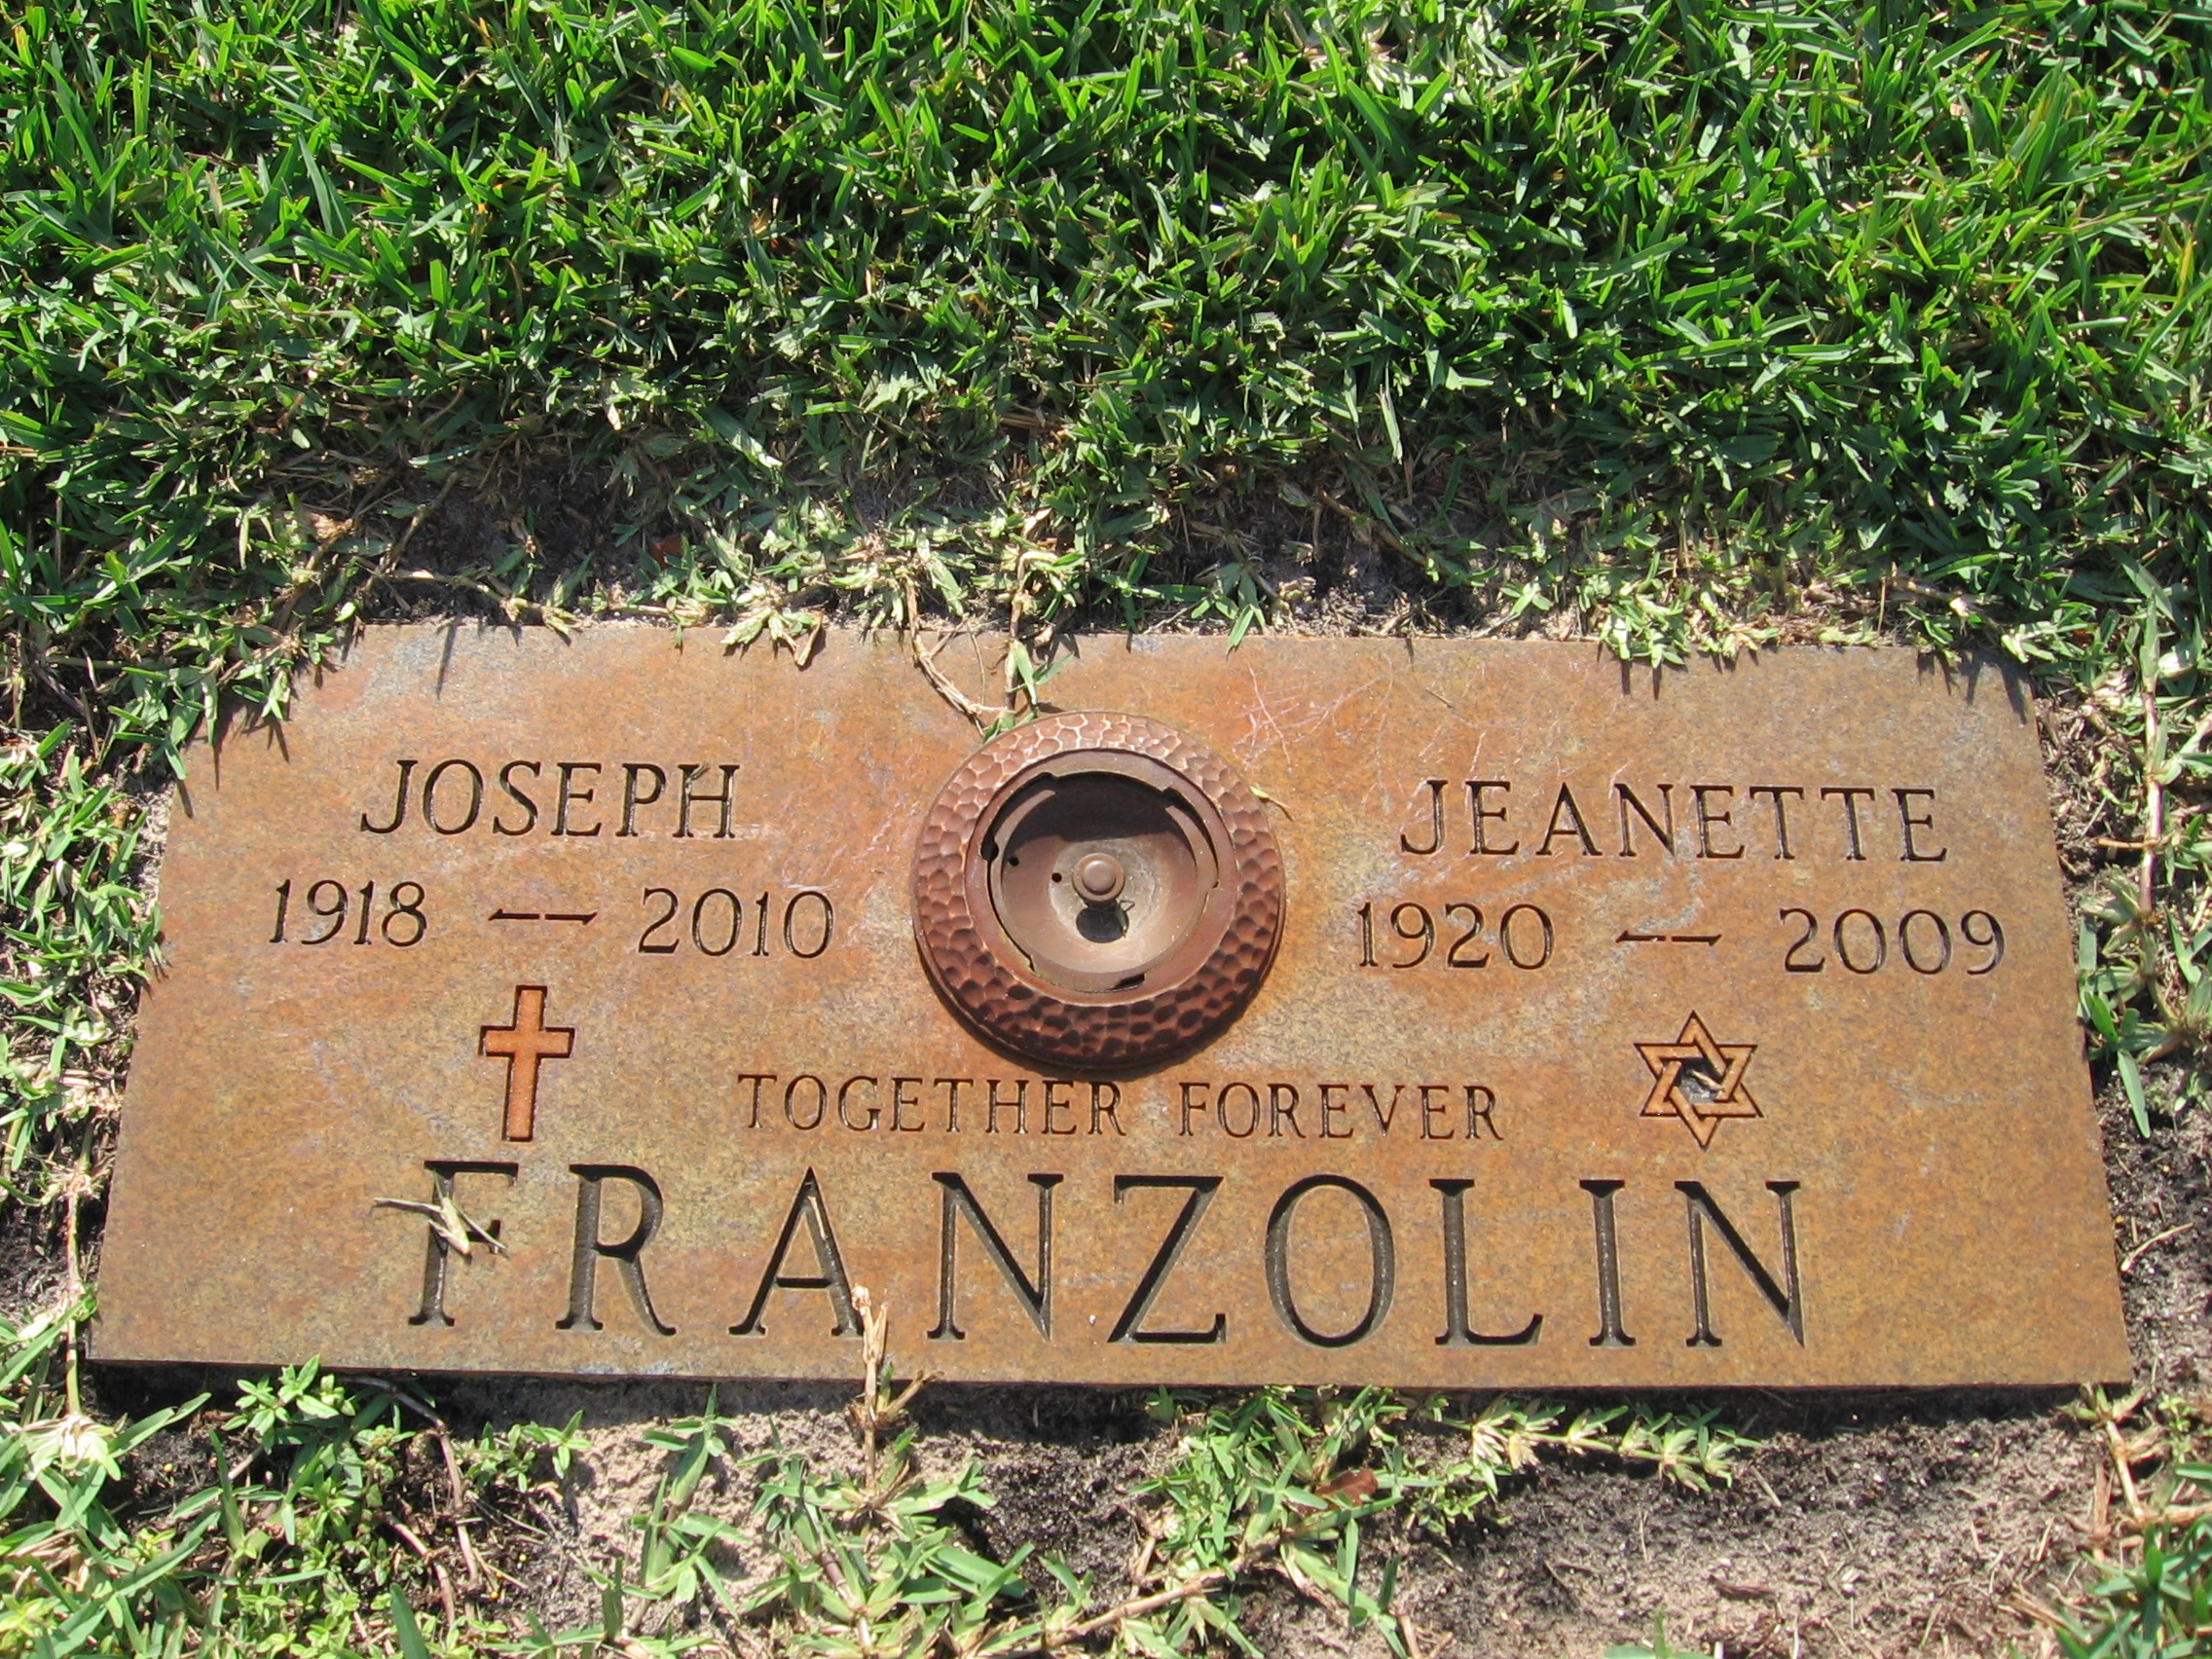 Joseph Franzolin